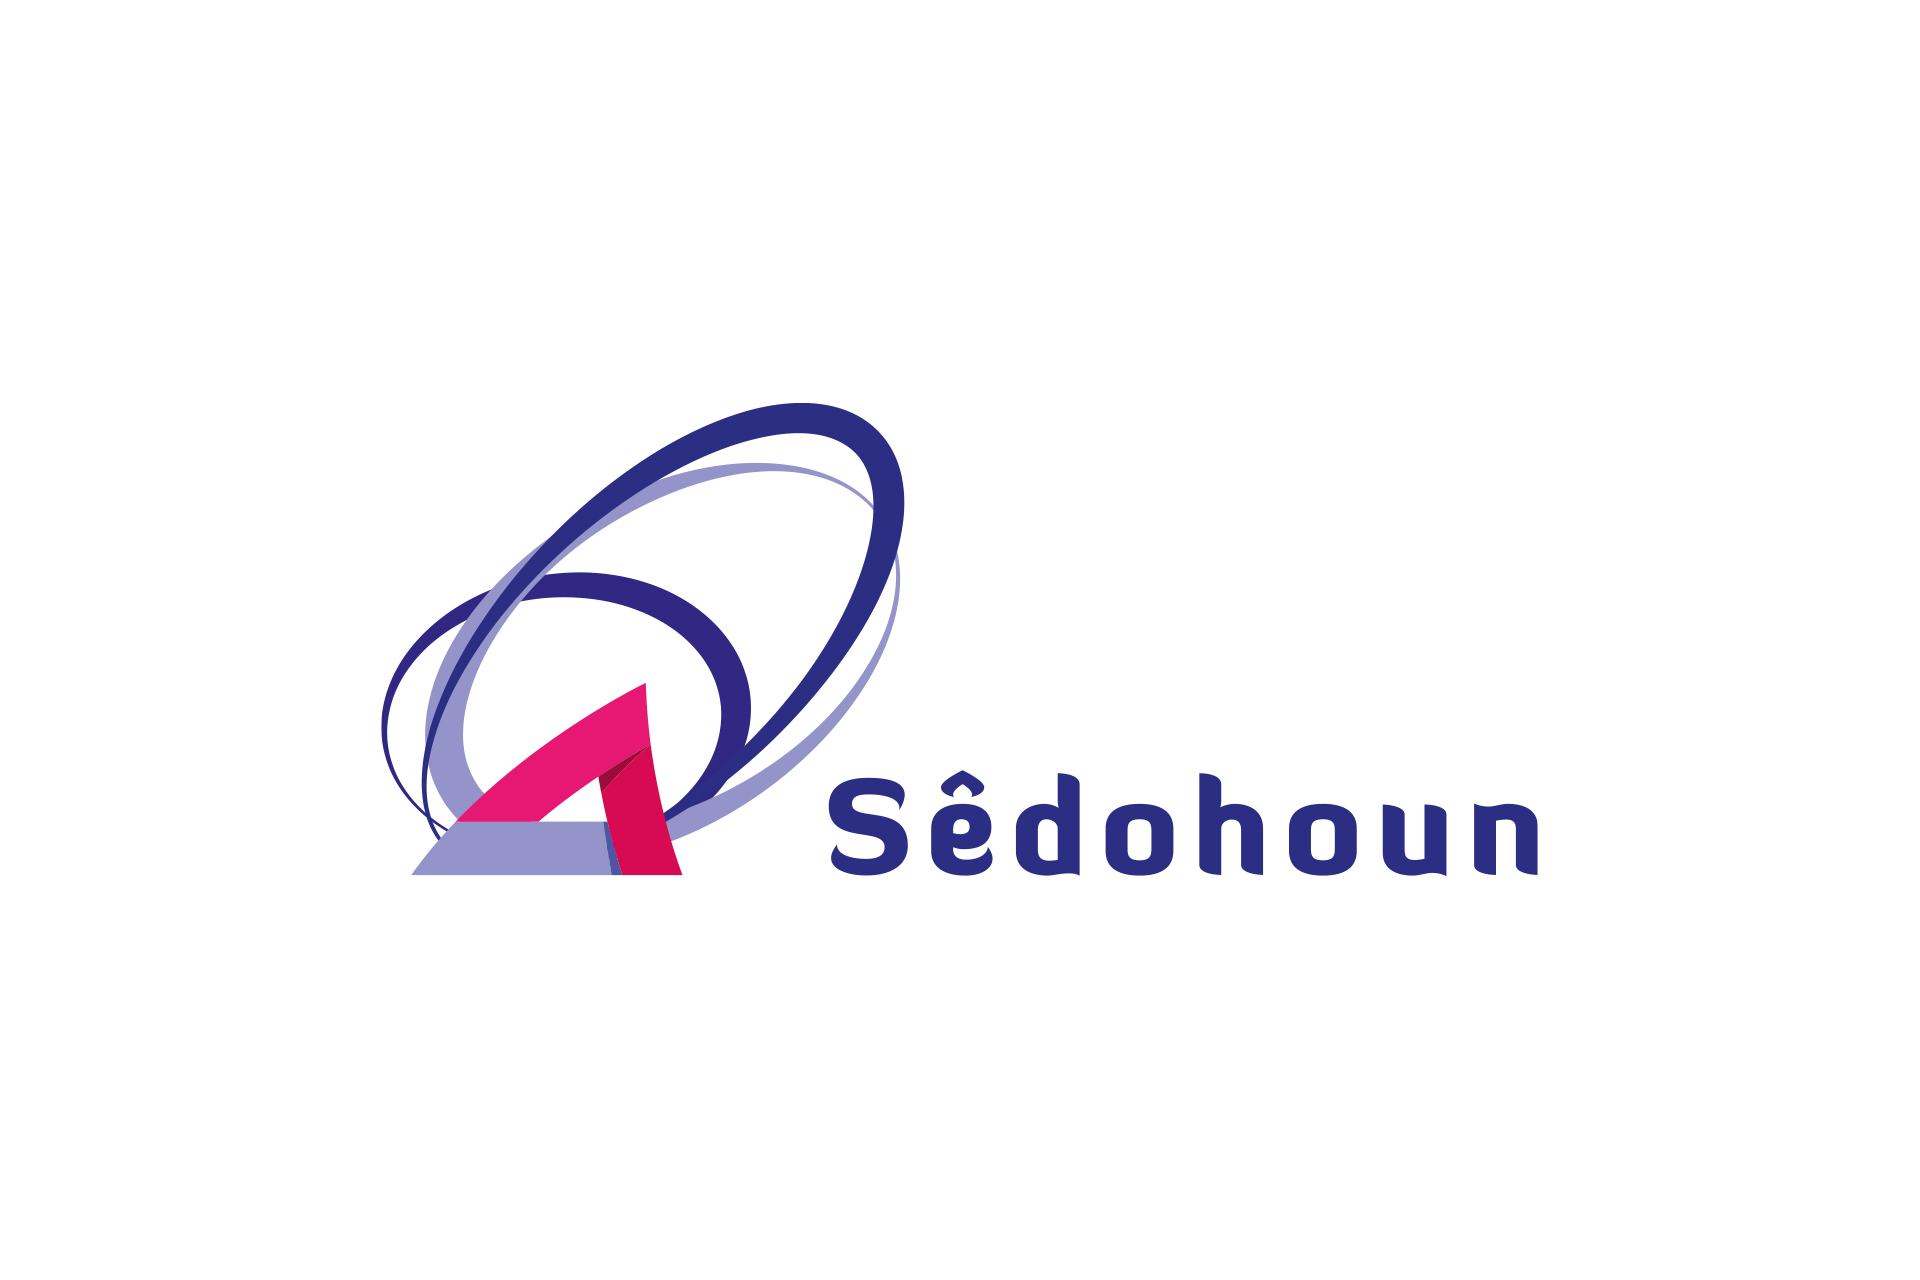 Logotype Sêdohoun